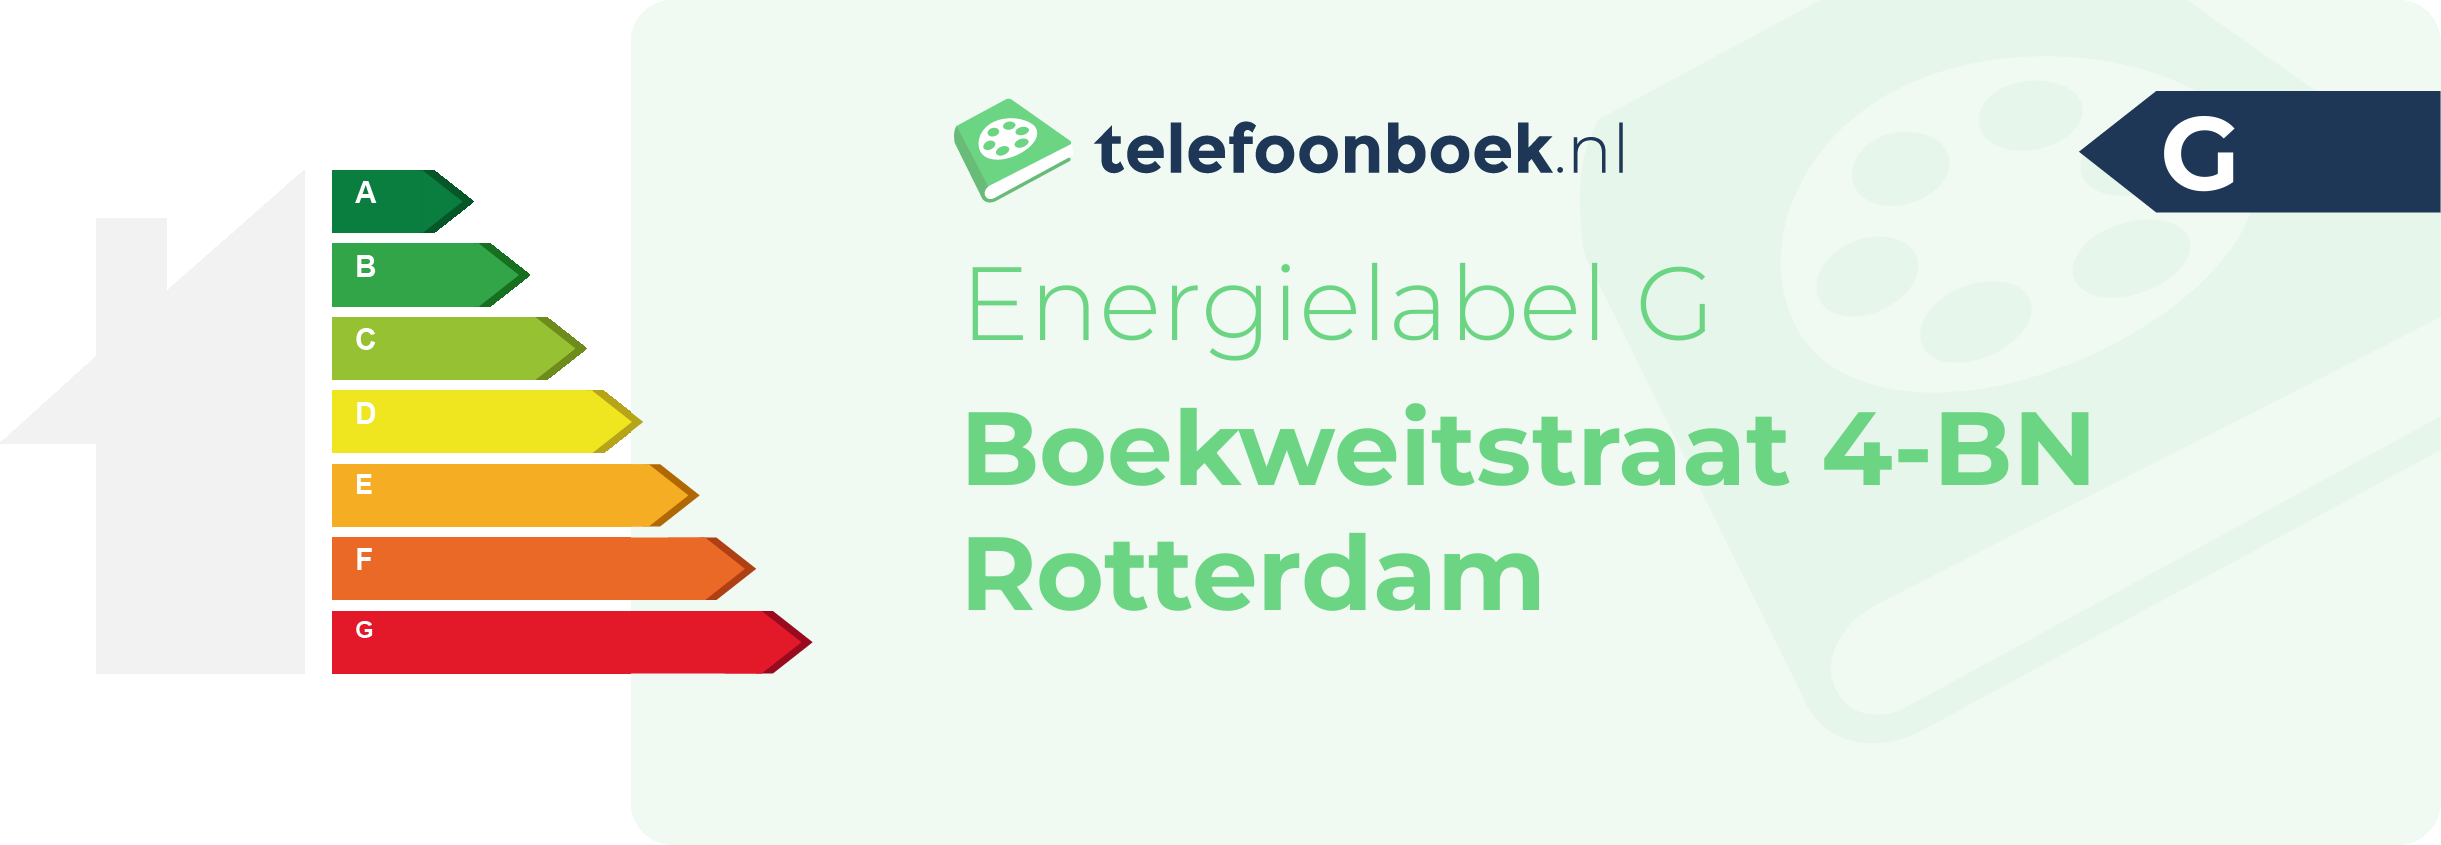 Energielabel Boekweitstraat 4-BN Rotterdam